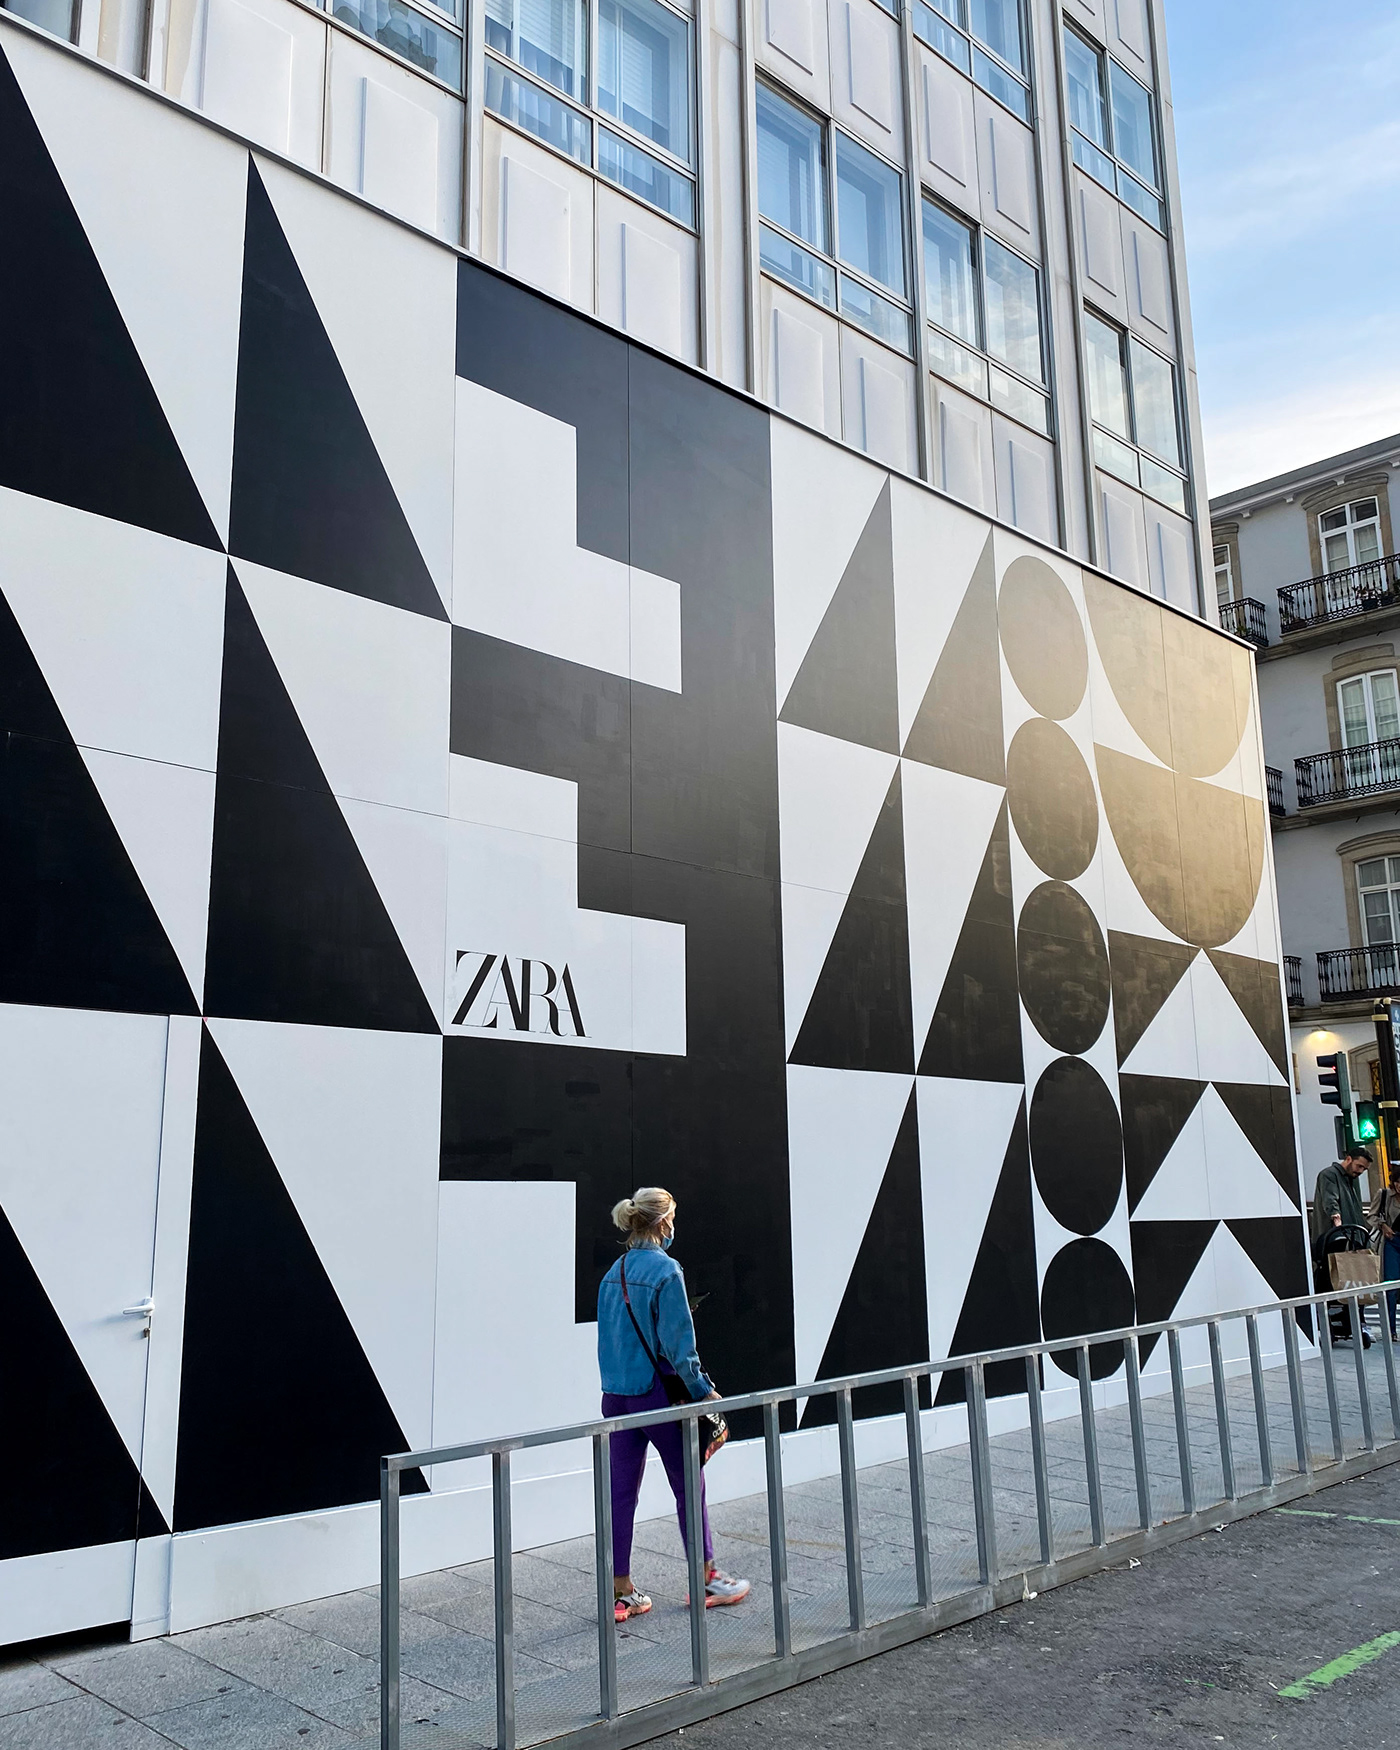 black and white contemporaryart geometric Mural Outdoor painting   Performance streetart Urbanart wall art